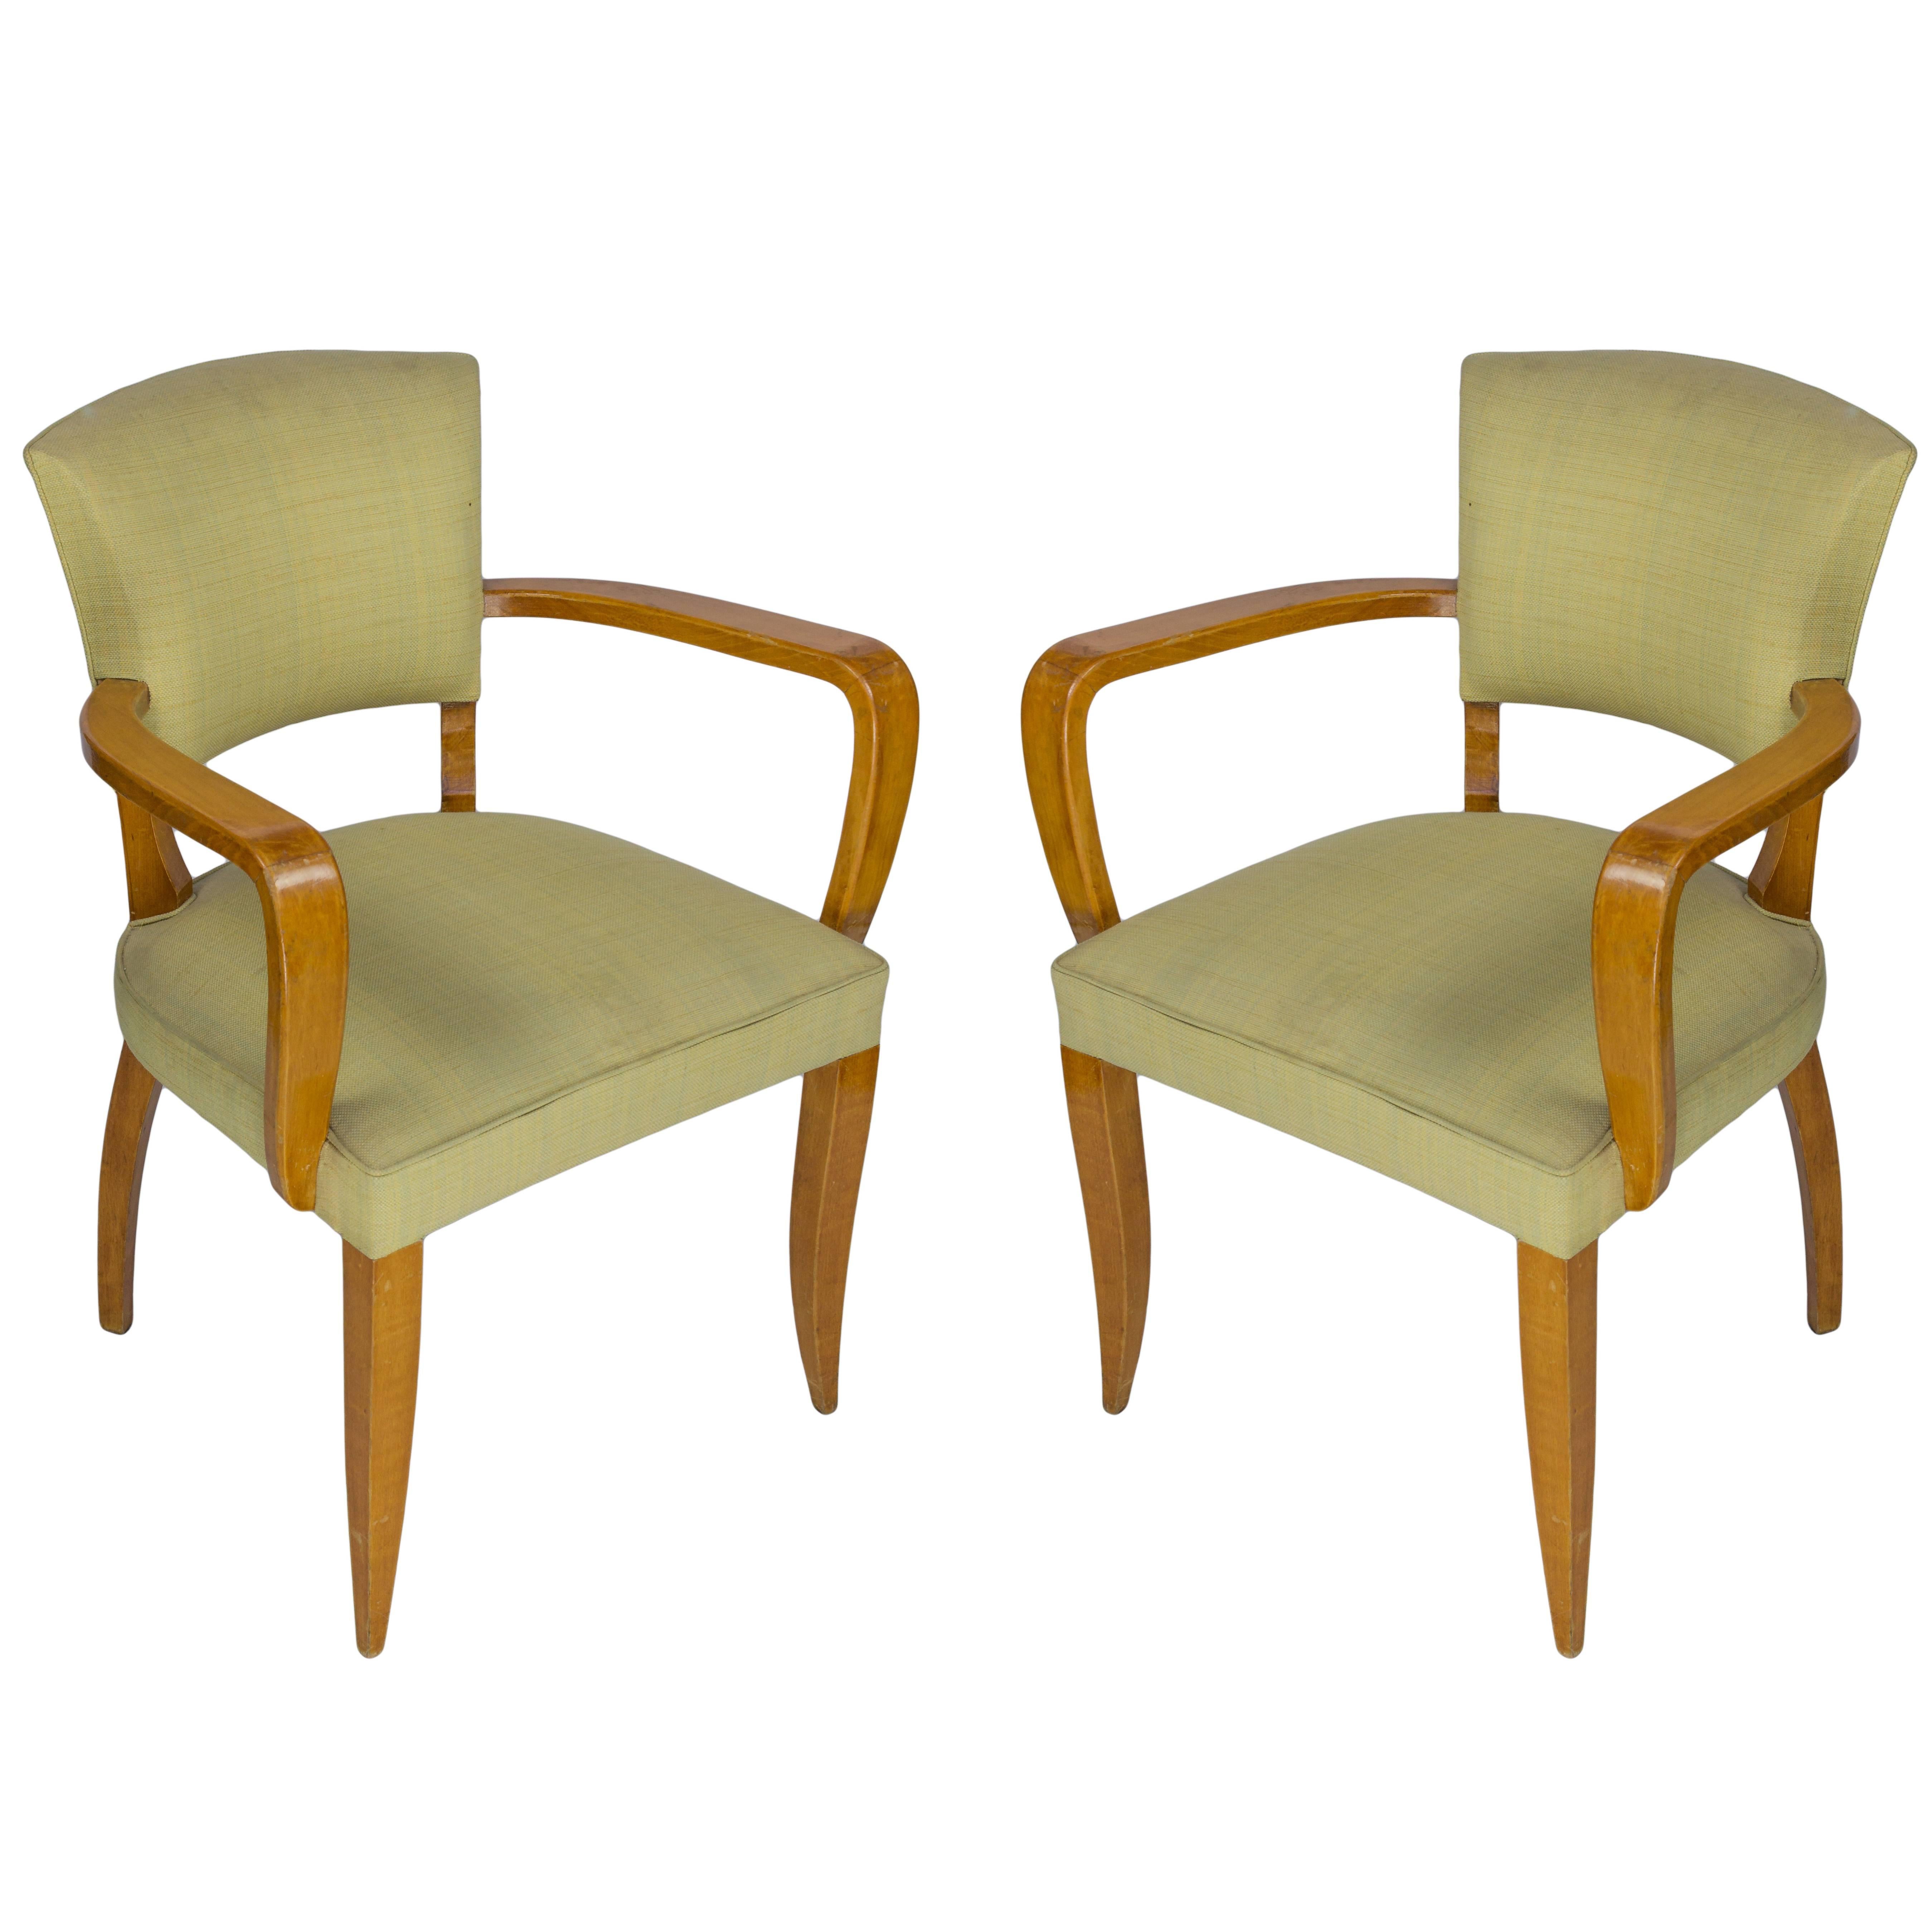 Pair of French, 1940s Bridge Chairs